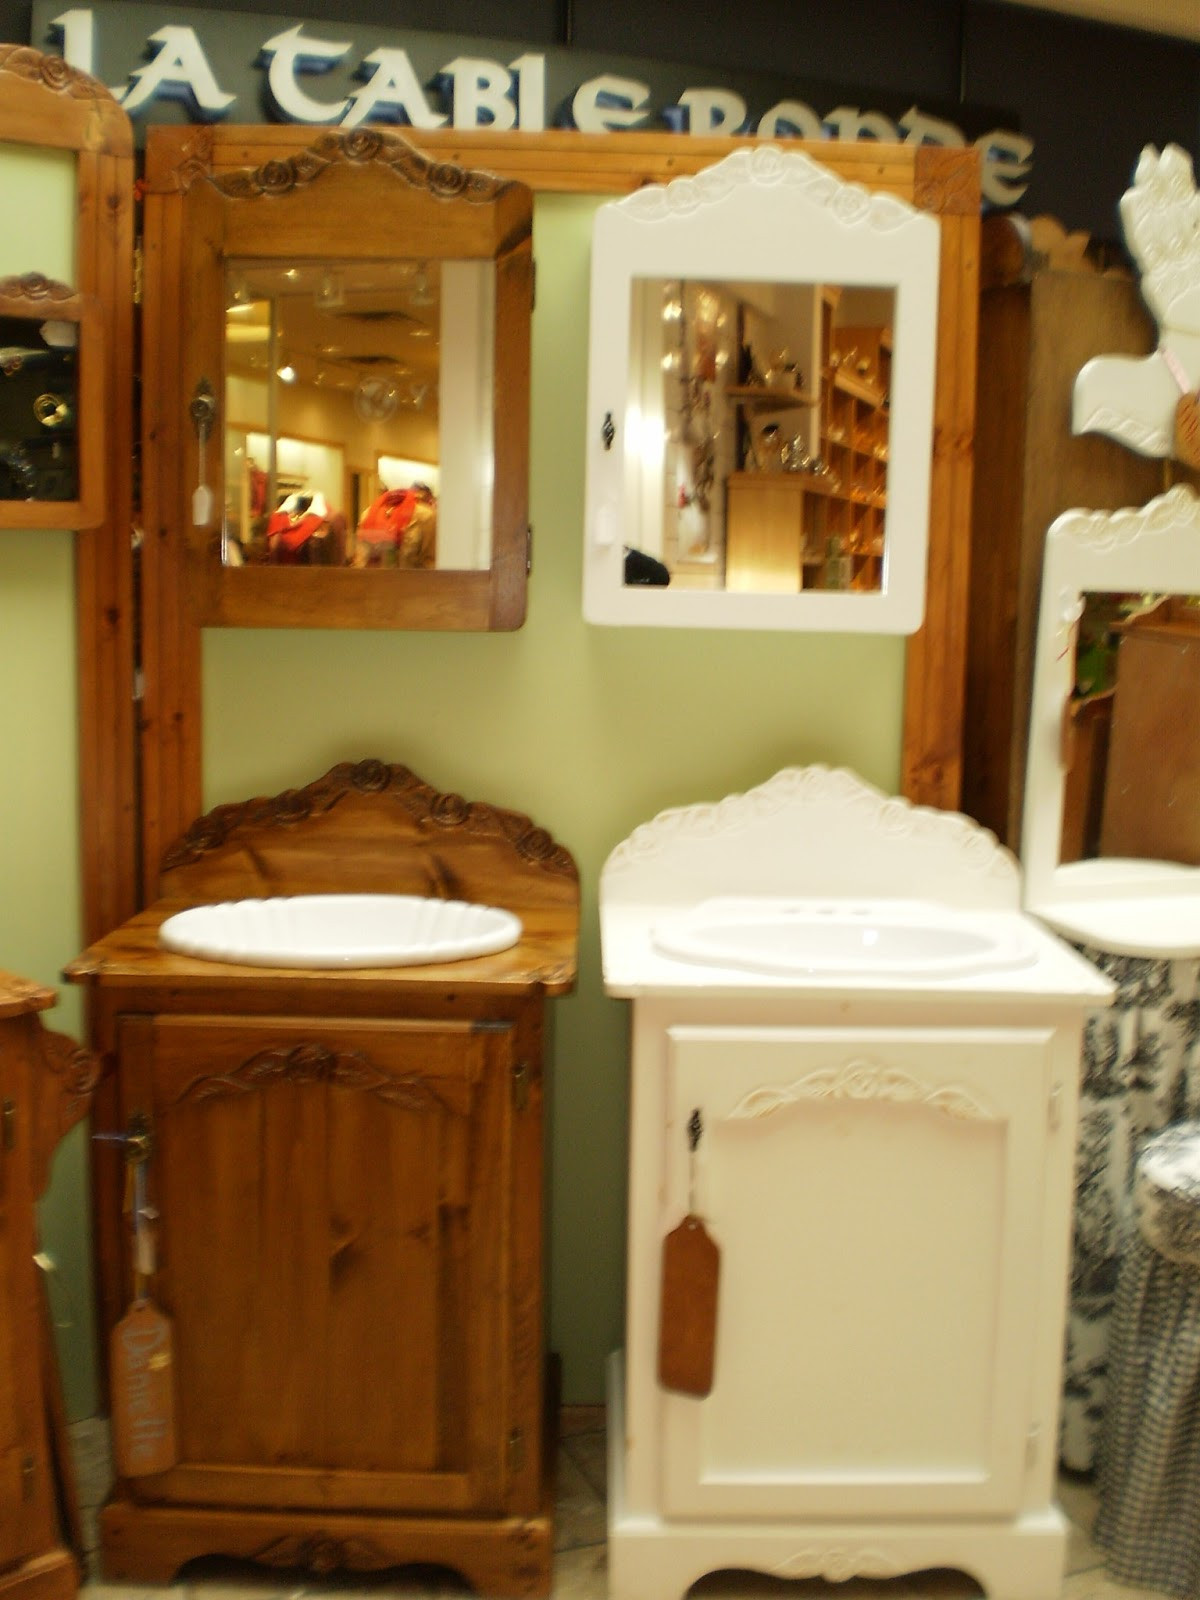 Double Vanity For Small Bathroom
 Eugenie s Woodworking Blog Small bathroom Vanities or